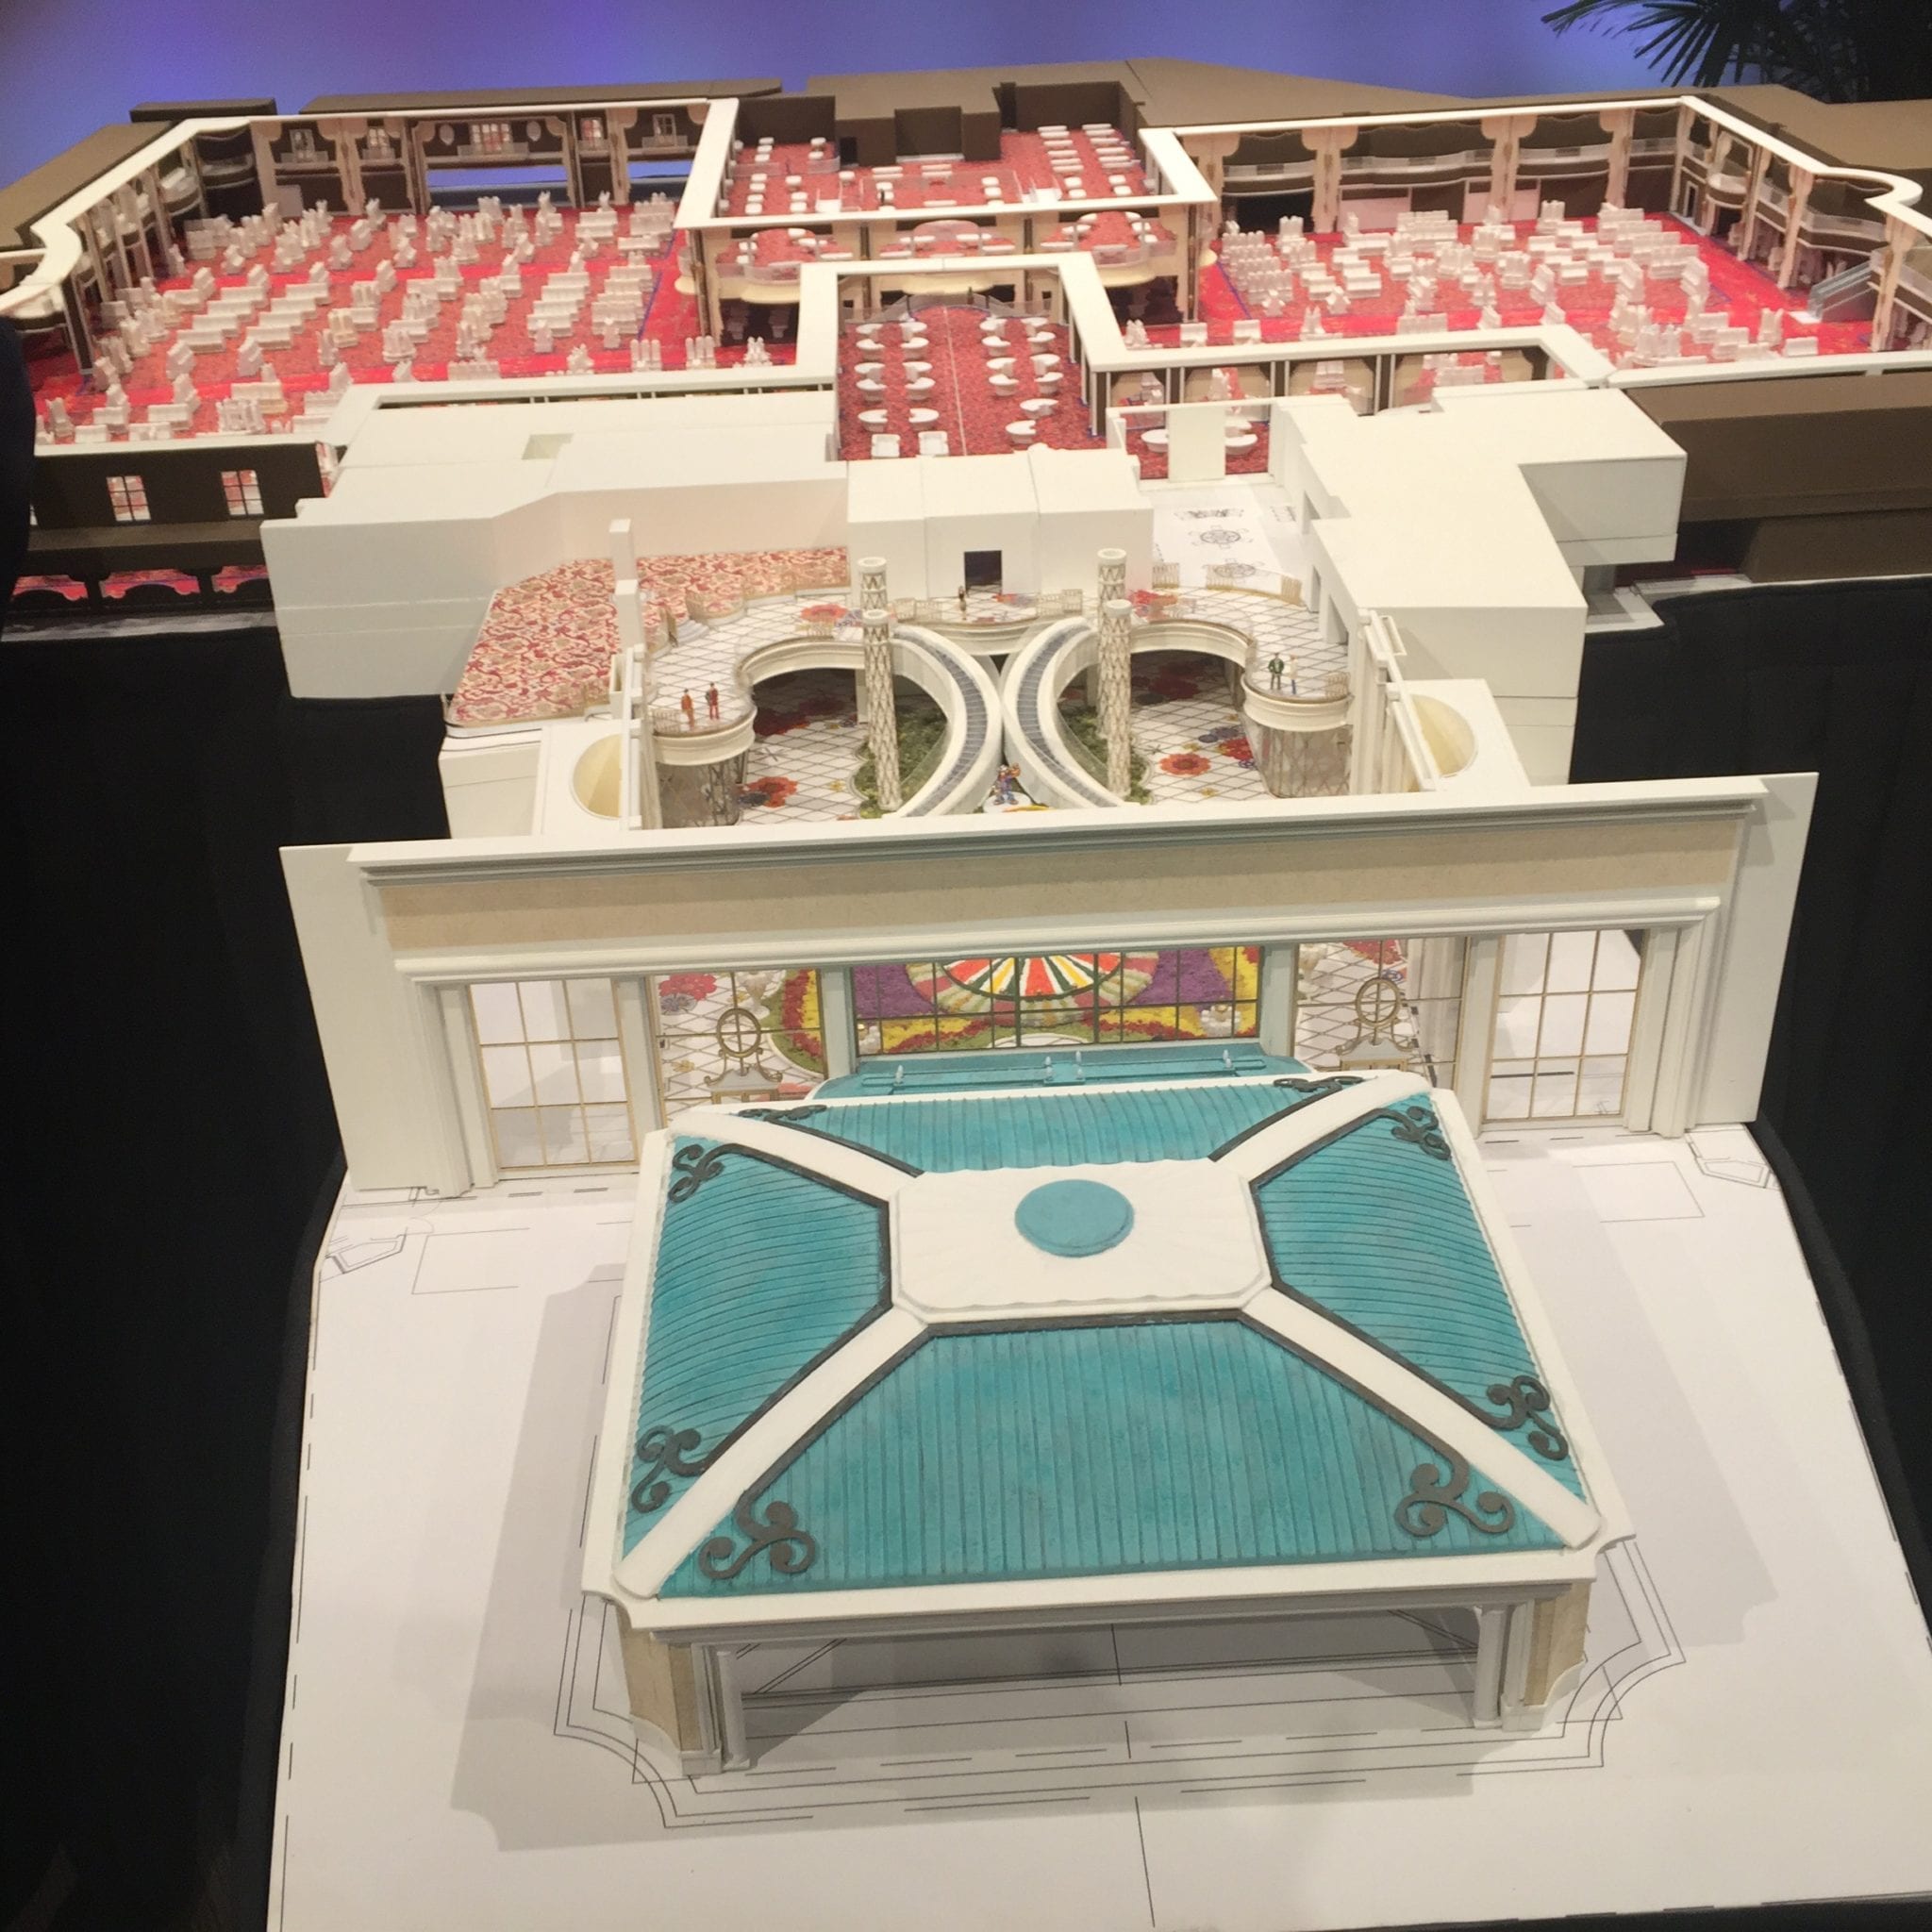 Model of the inside of the Wynn casino.